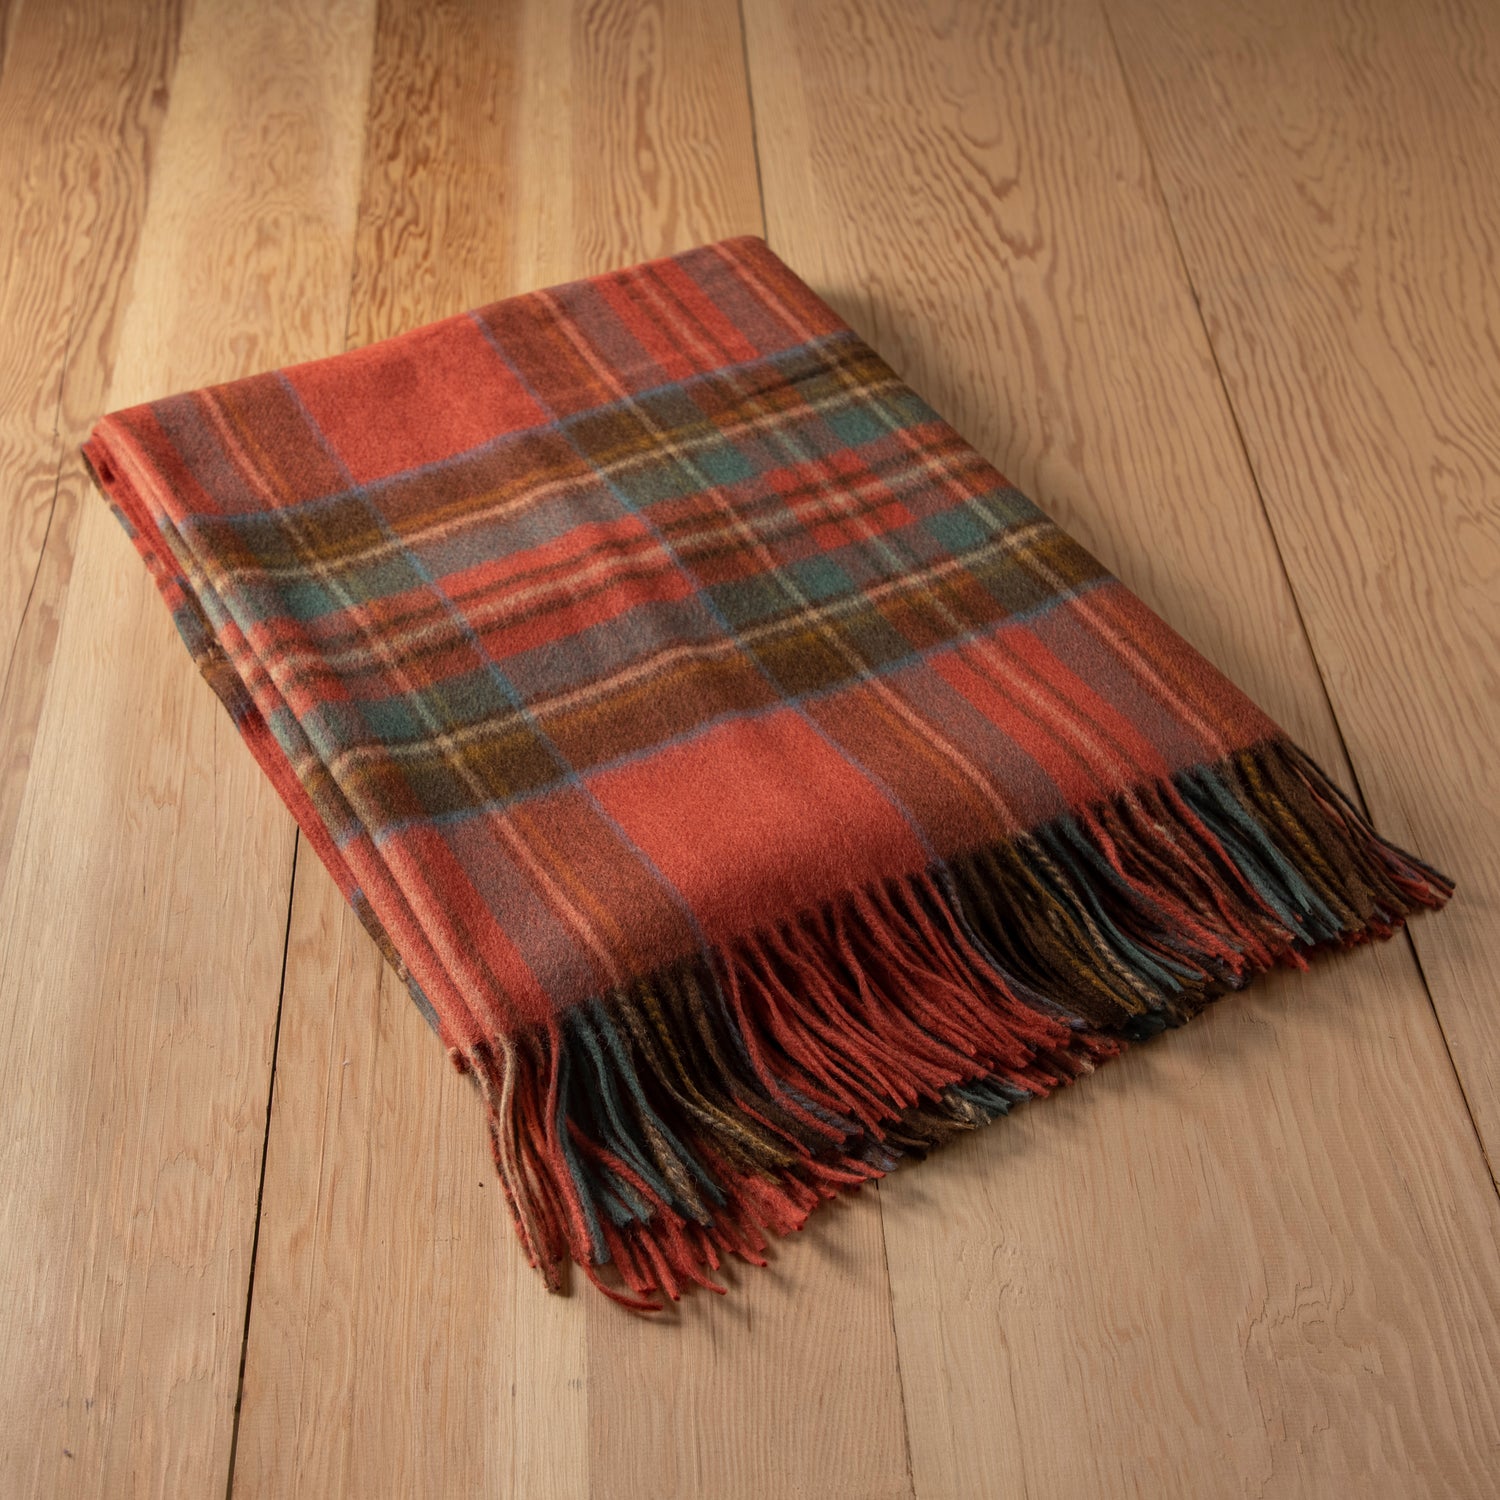 Royal Stewart, Decorative Blankets